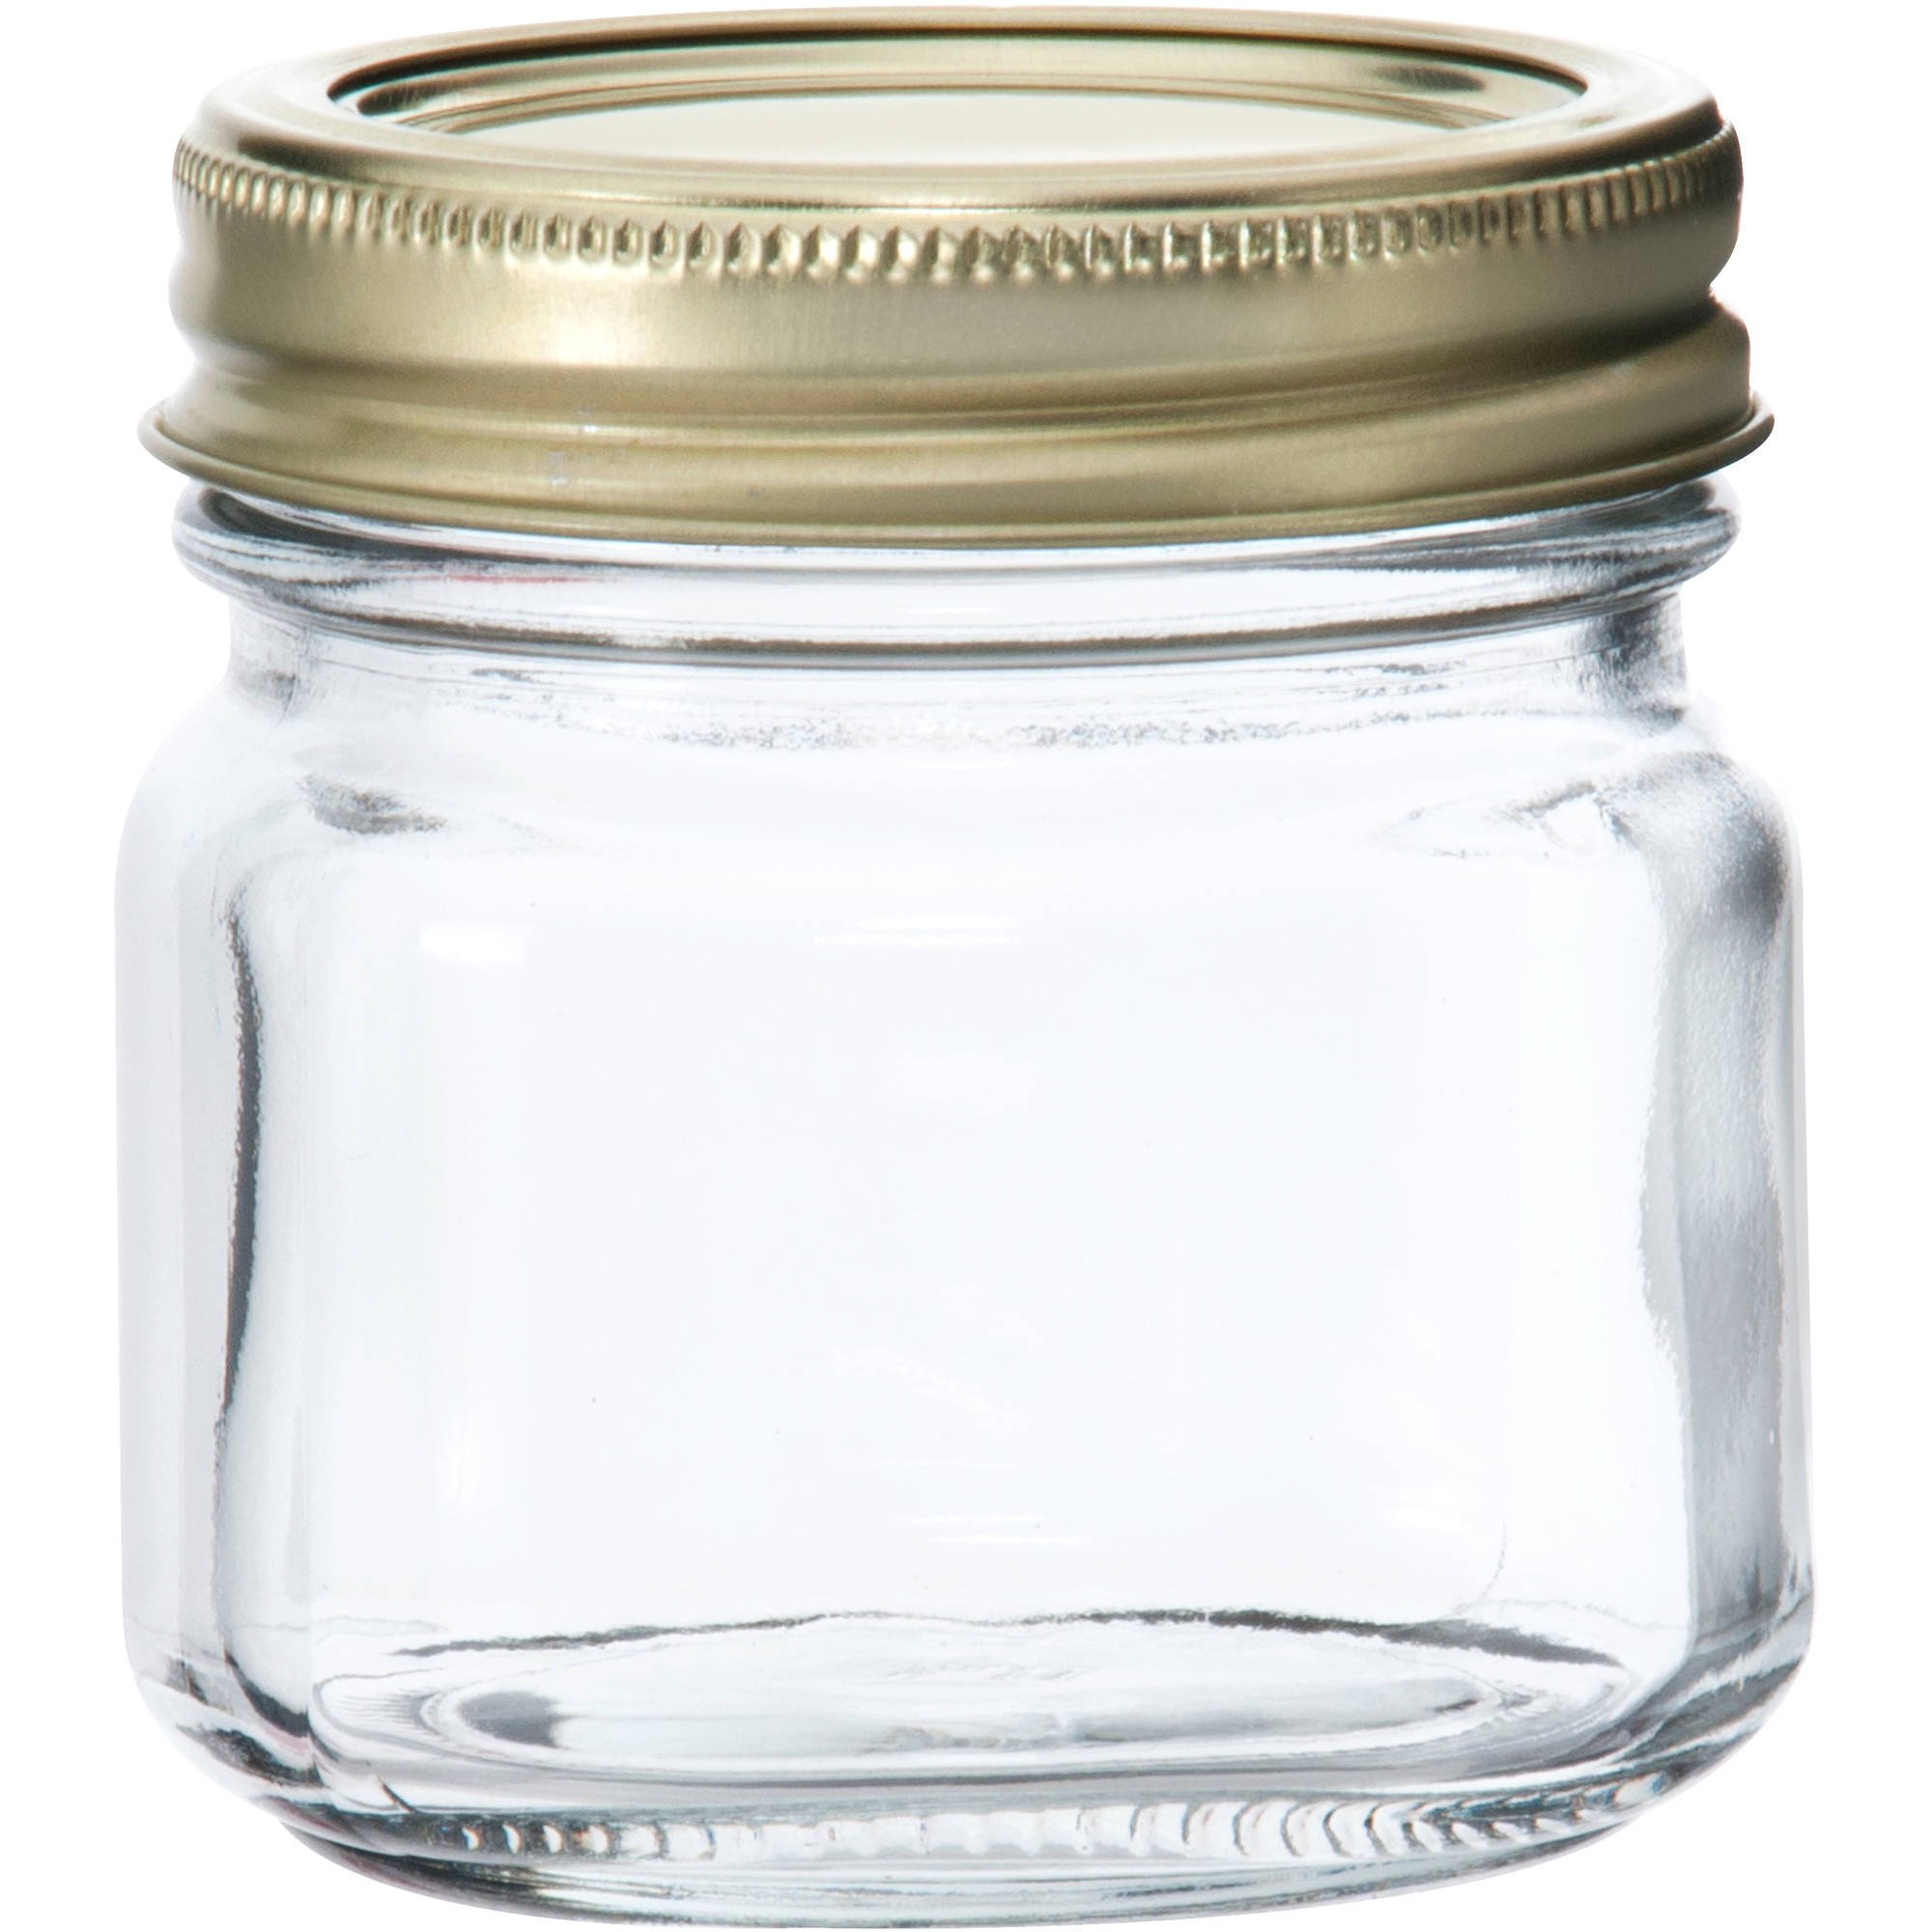 Anchor Hocking Half-pint (8oz) Glass Canning Jar Set, 12pk - image 1 of 5